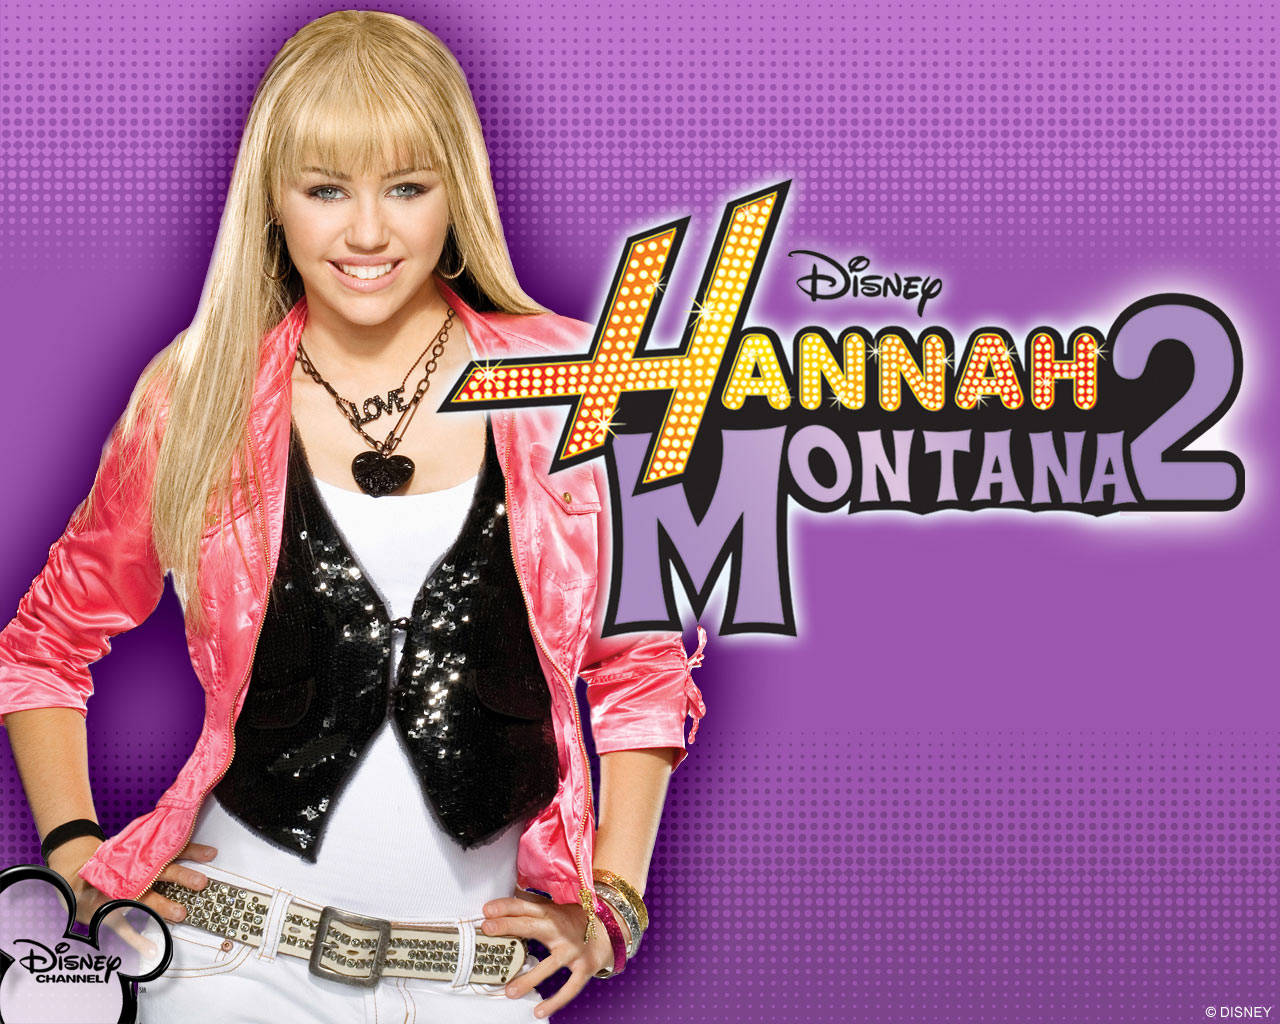 Hannah Montana Season 2